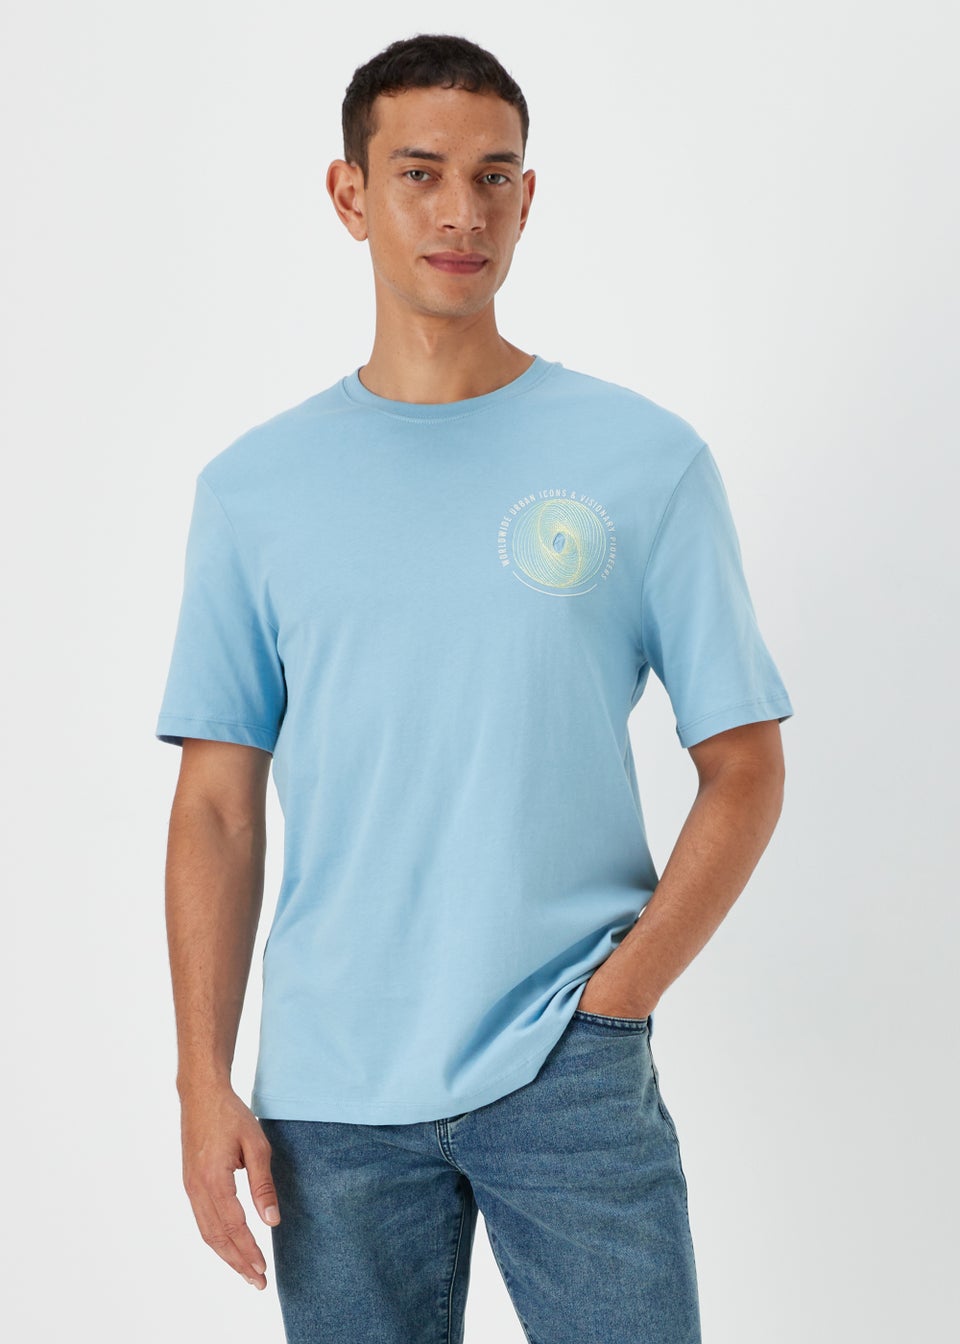 US Athletic Light Blue Graphic T-Shirt